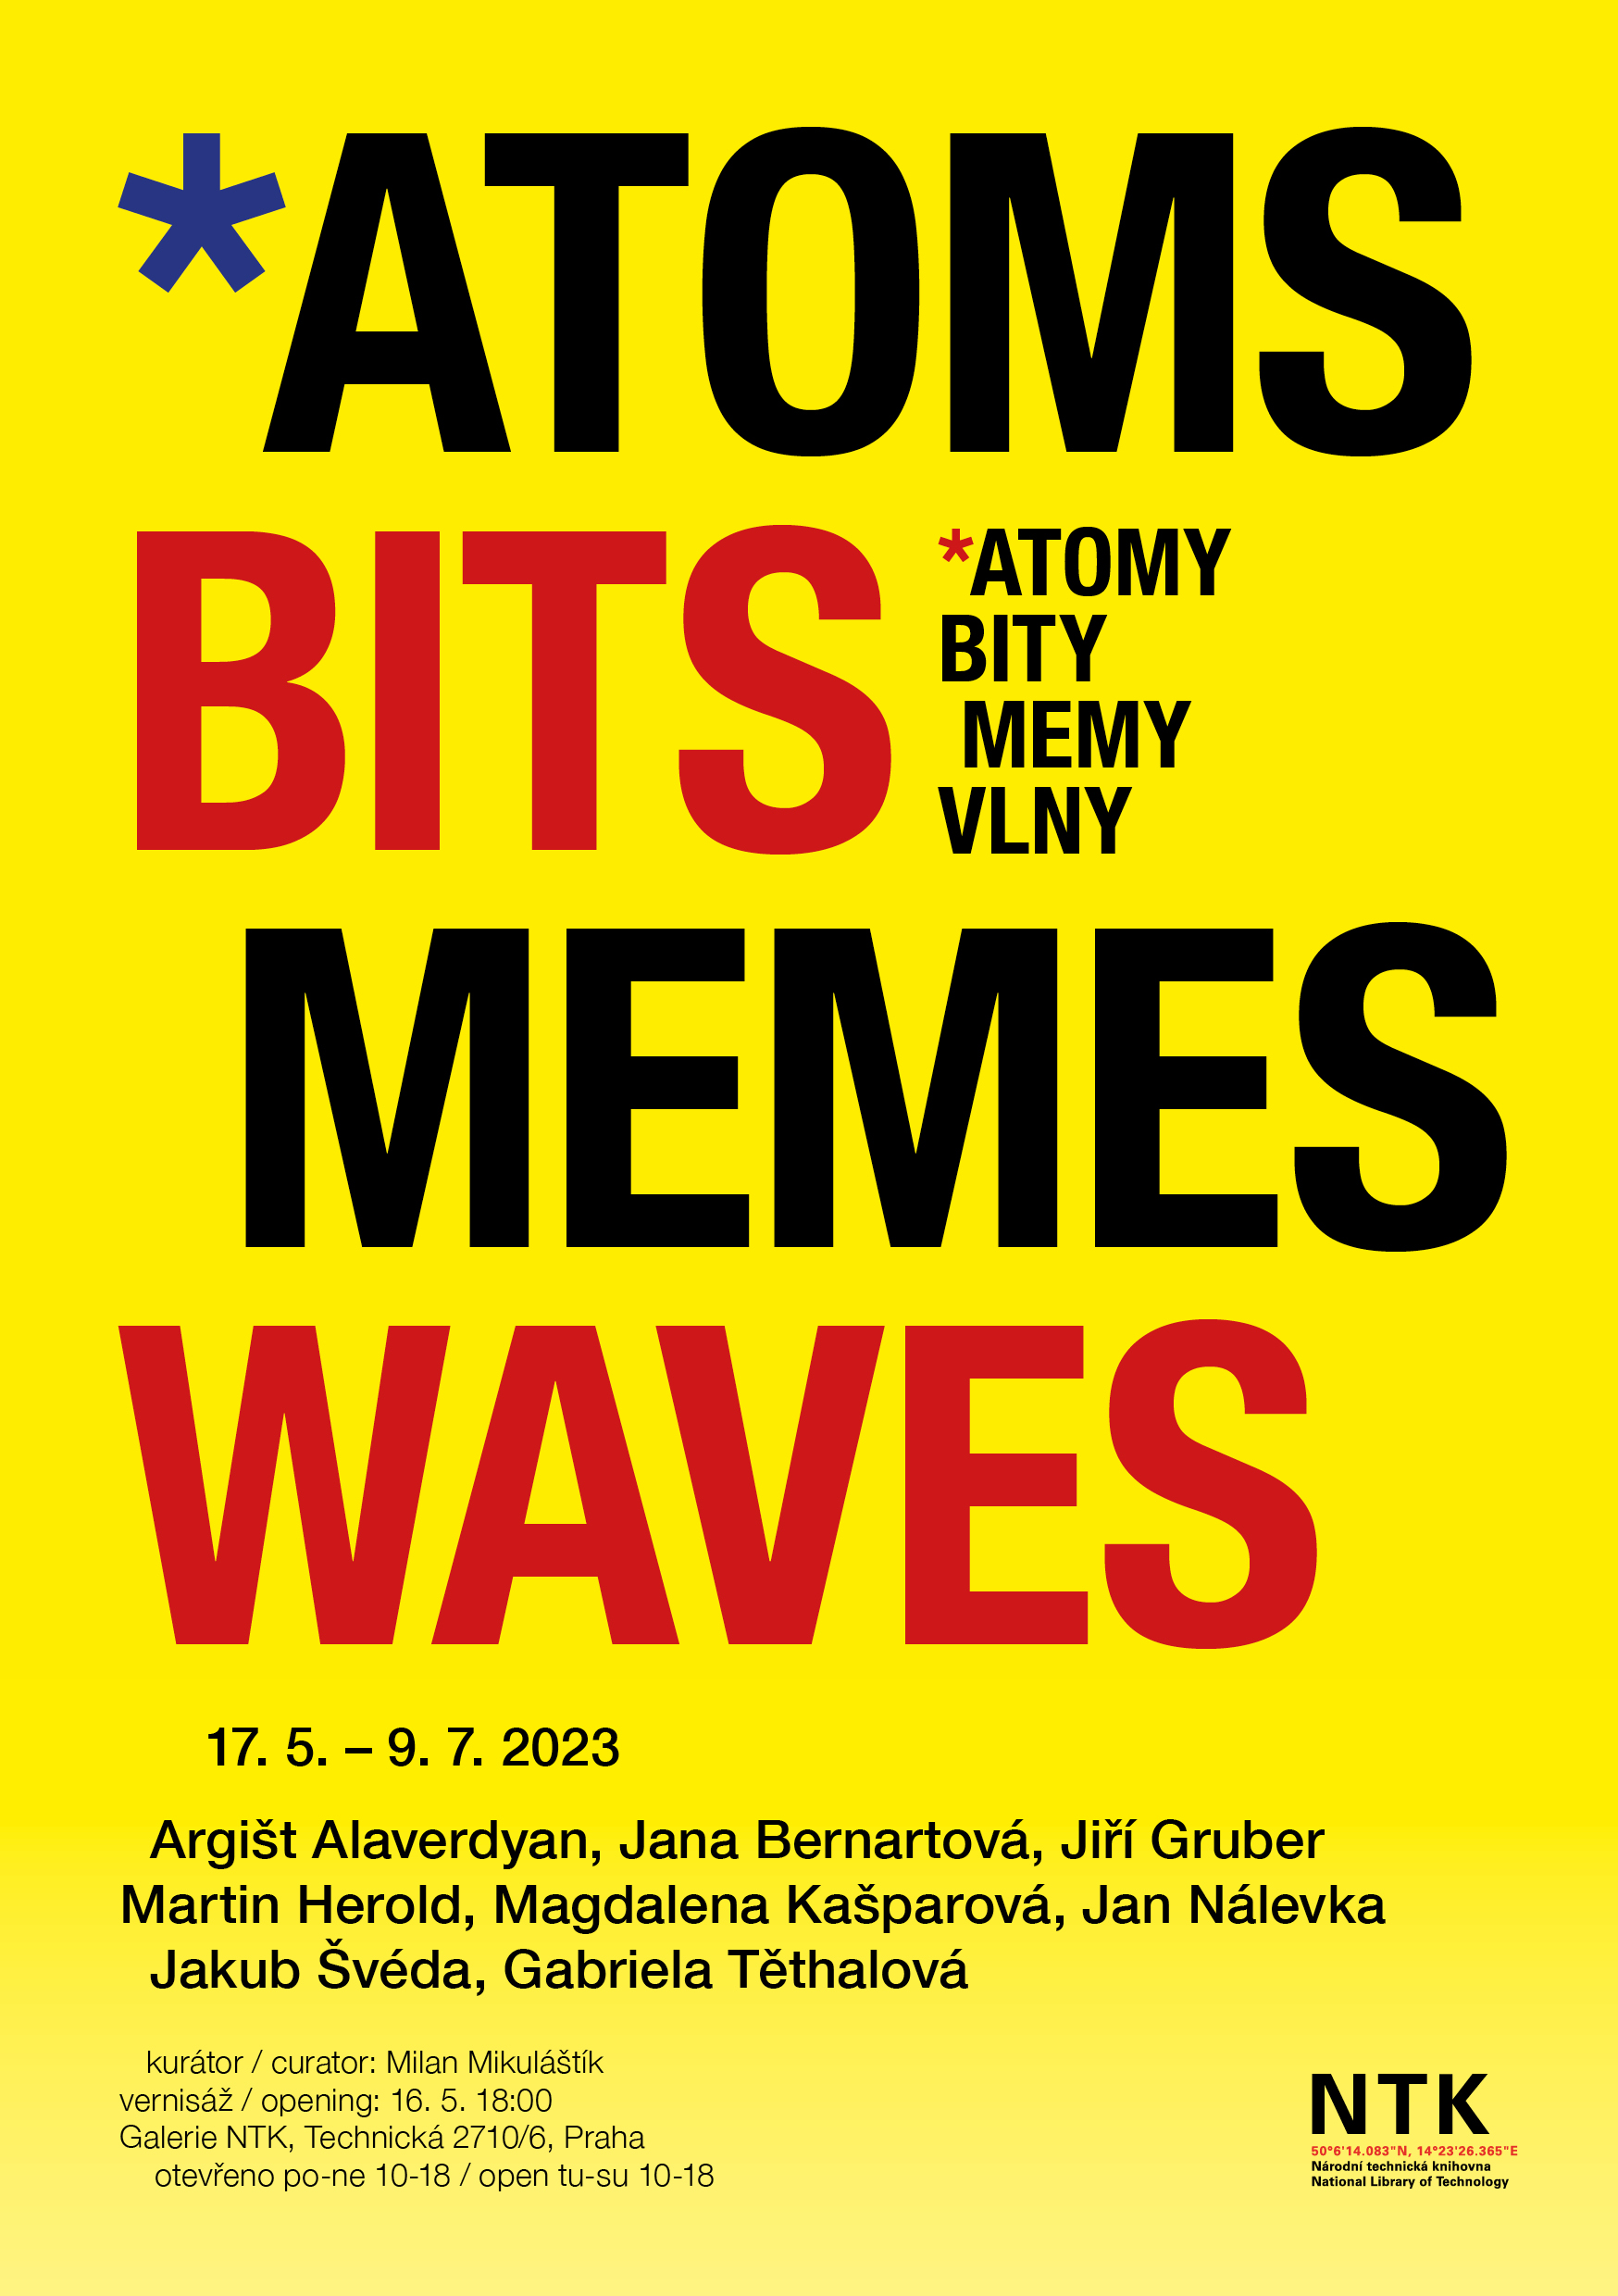 ATOMS BITS MEMES WAVES